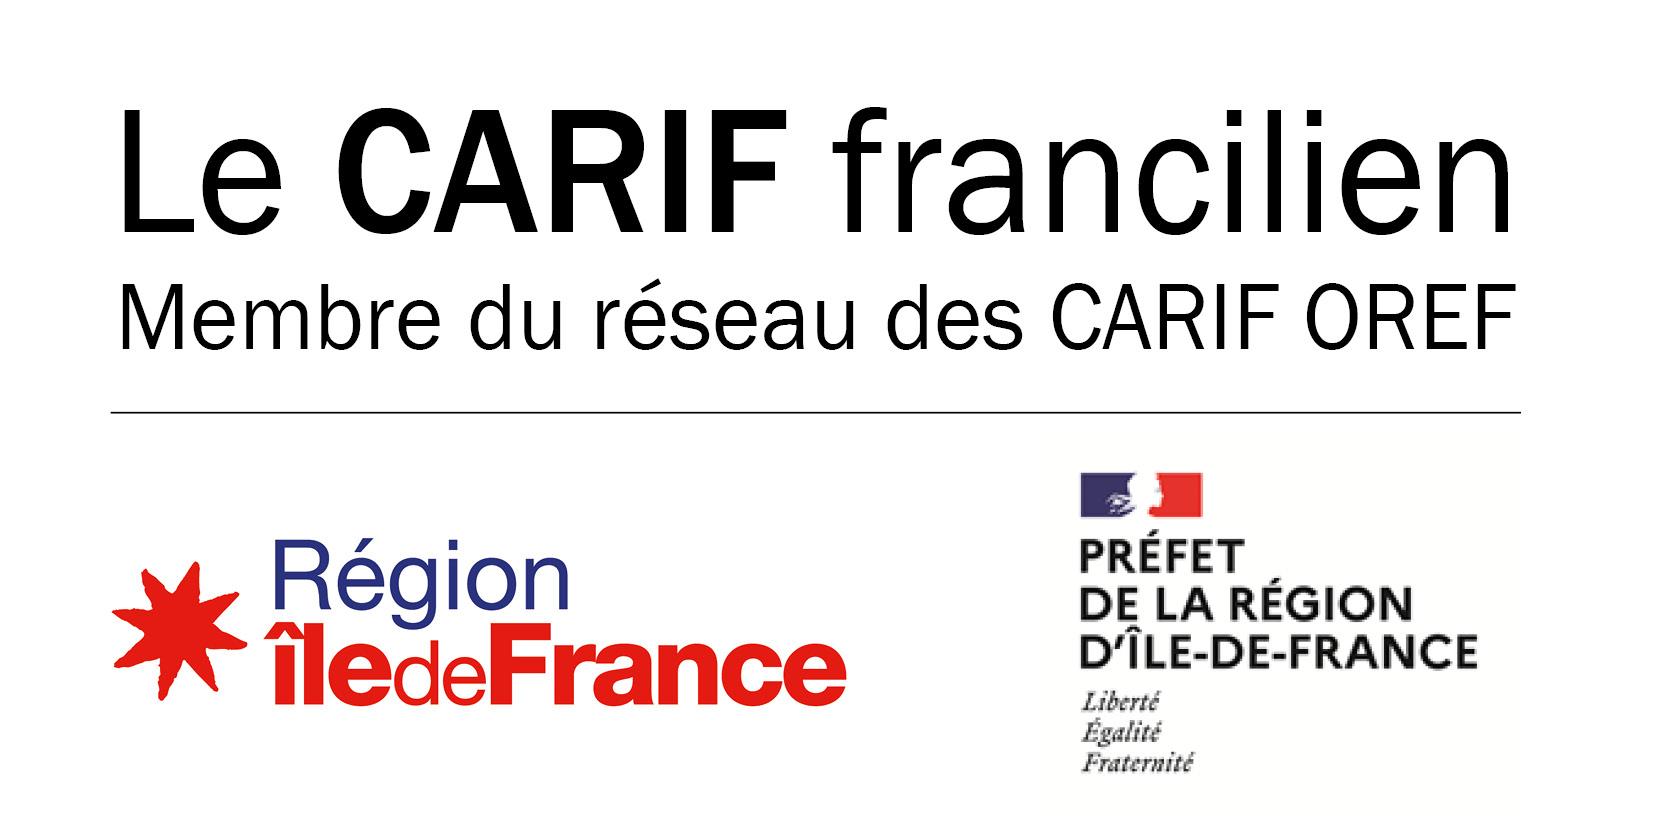 Logo CARIF francilien